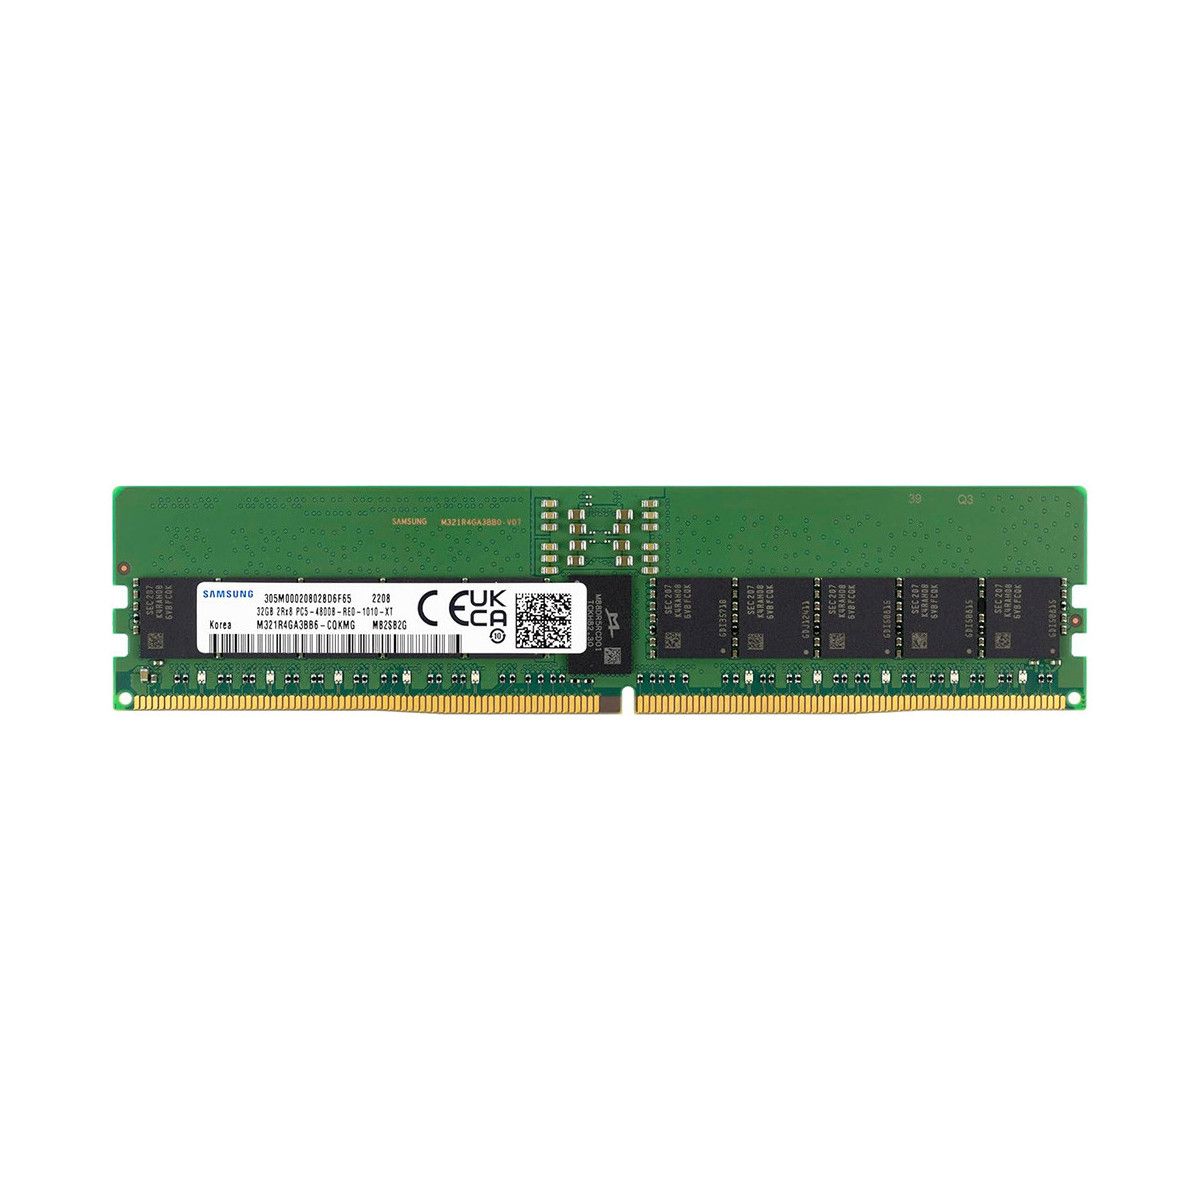 P58356-H21-MS - Memstar 1x 32GB DDR5-4800 RDIMM PC5-38400R - Memorie OEM compatibilă Mem-star 1 - Memstar 